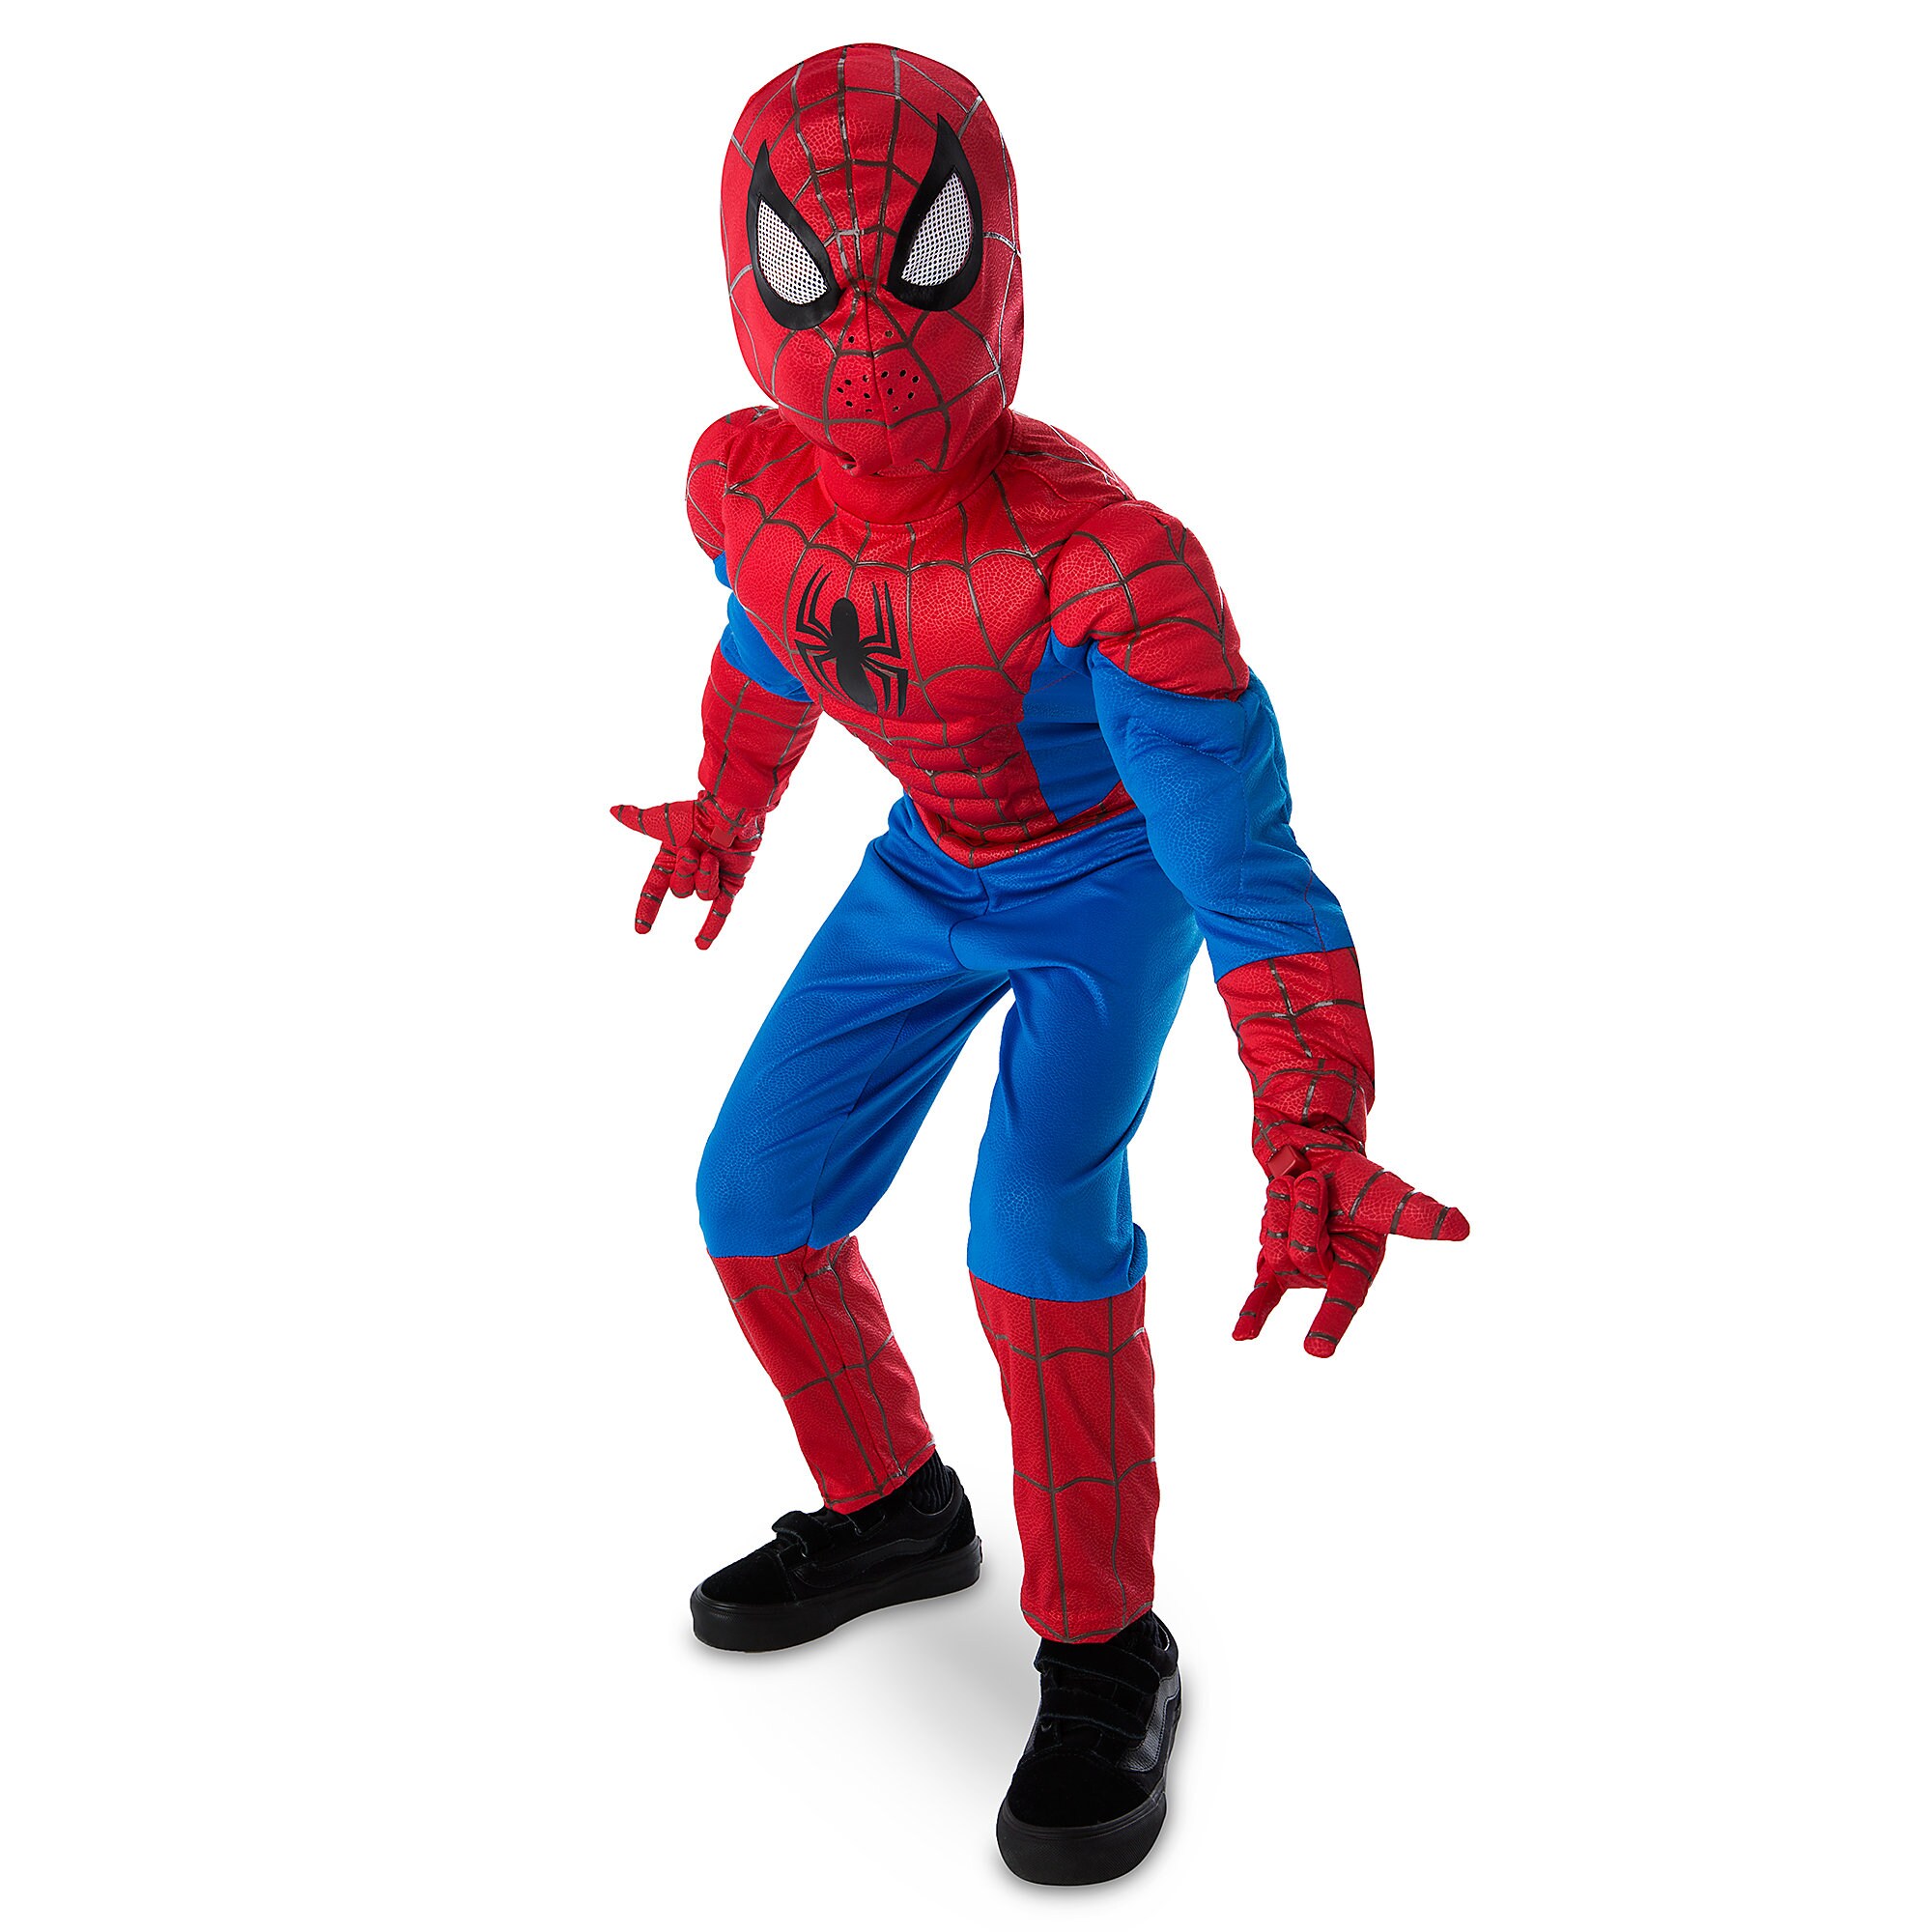 Spider-Man Ultimate Light-Up Costume for Kids